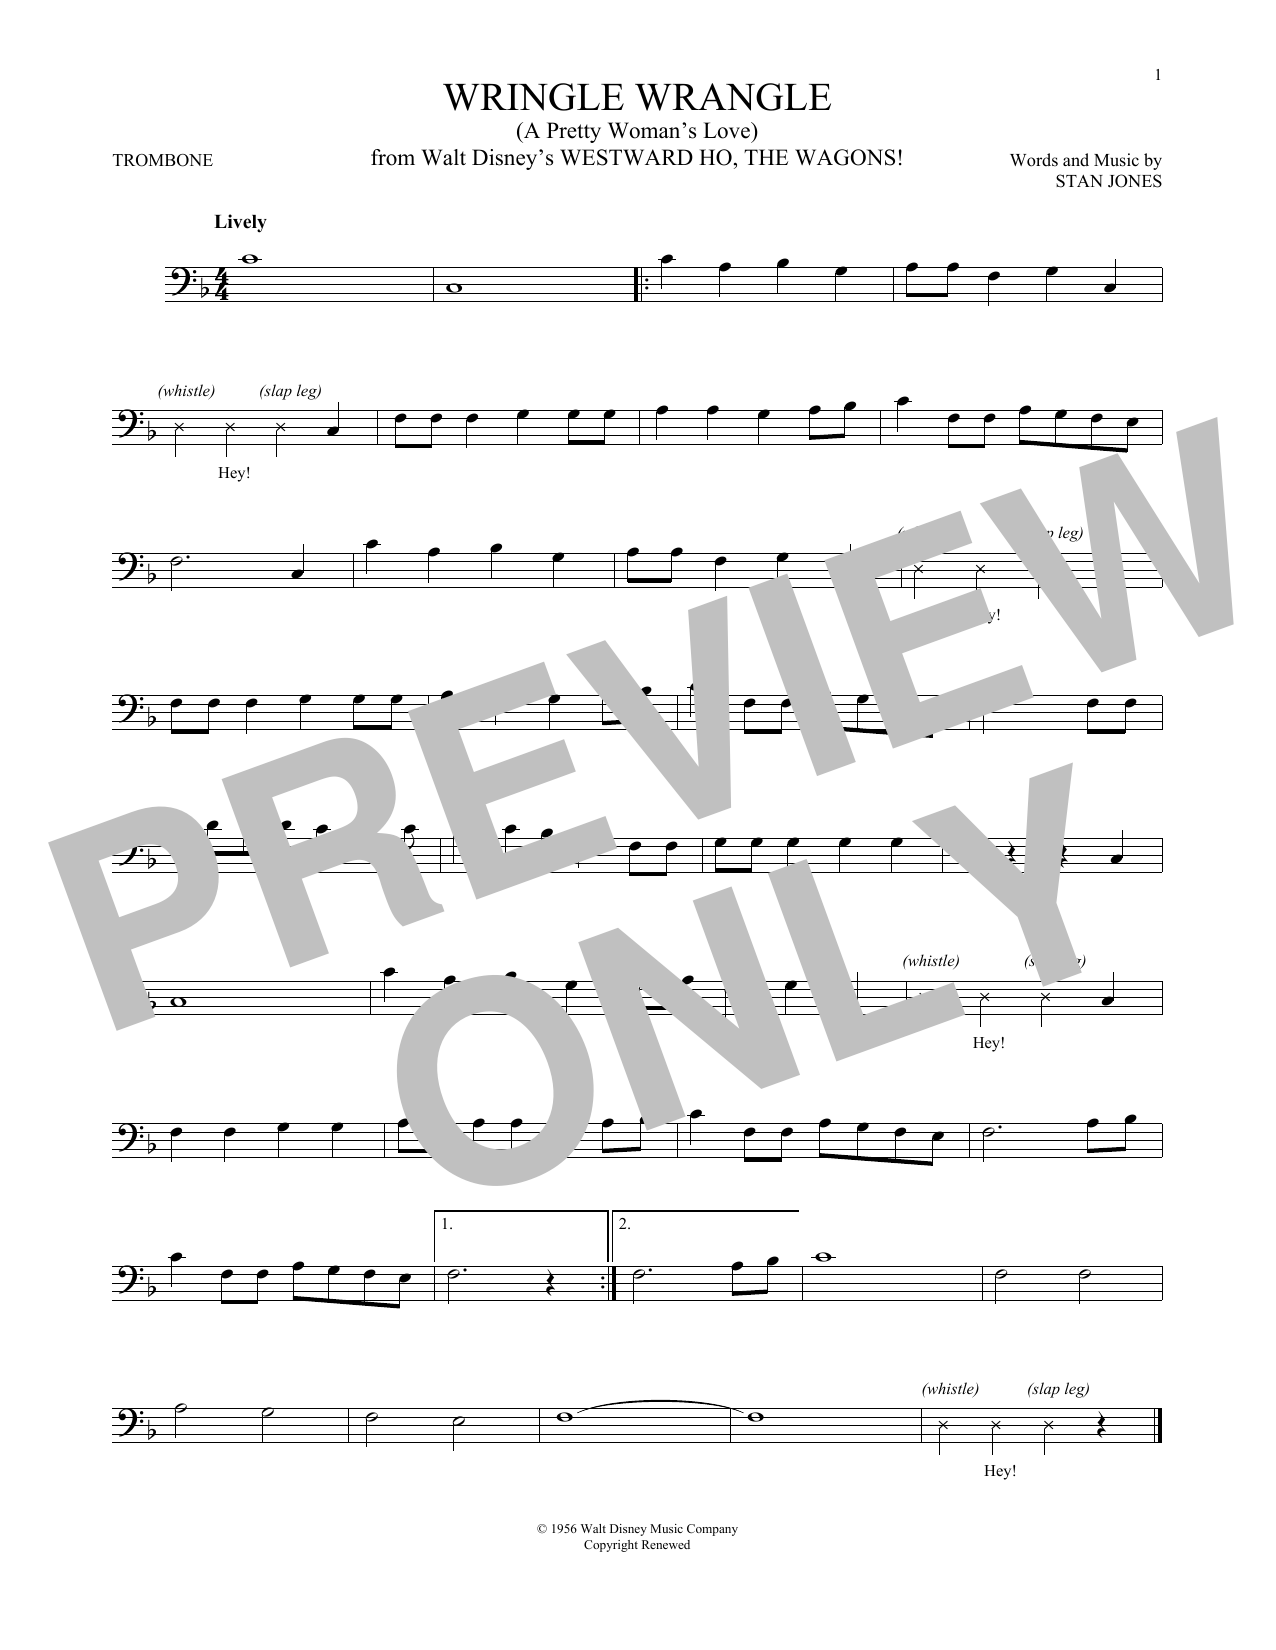 Stan Jones Wringle Wrangle (A Pretty Woman's Love) Sheet Music Notes & Chords for Trombone - Download or Print PDF